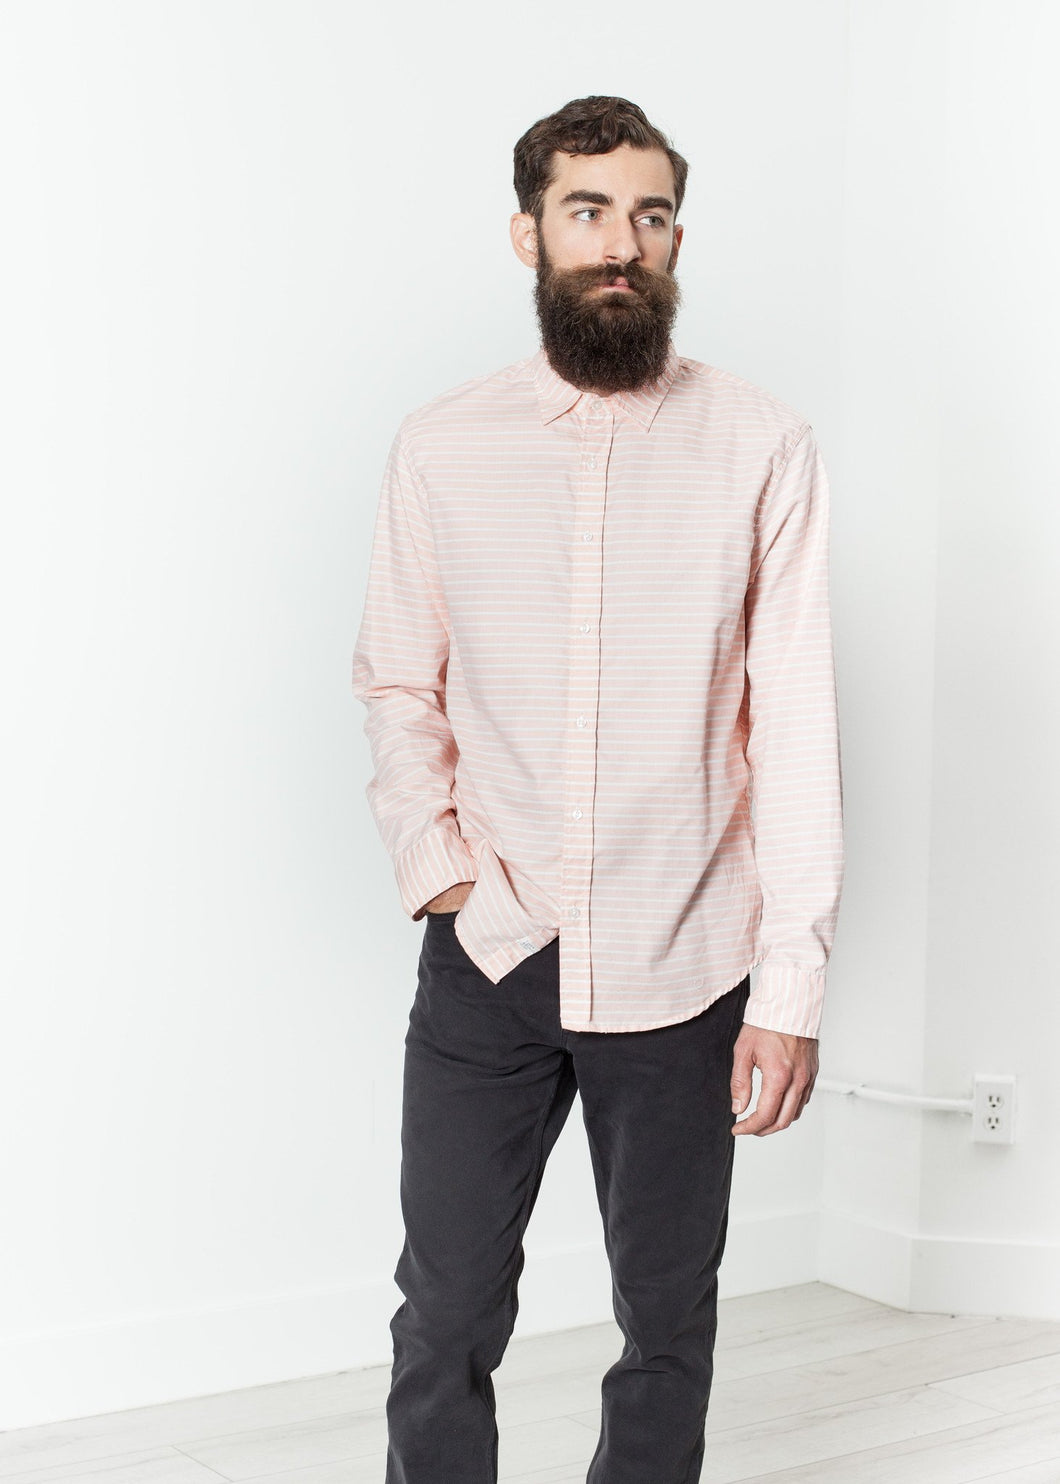 Paul Shirt in Sherbet Stripe